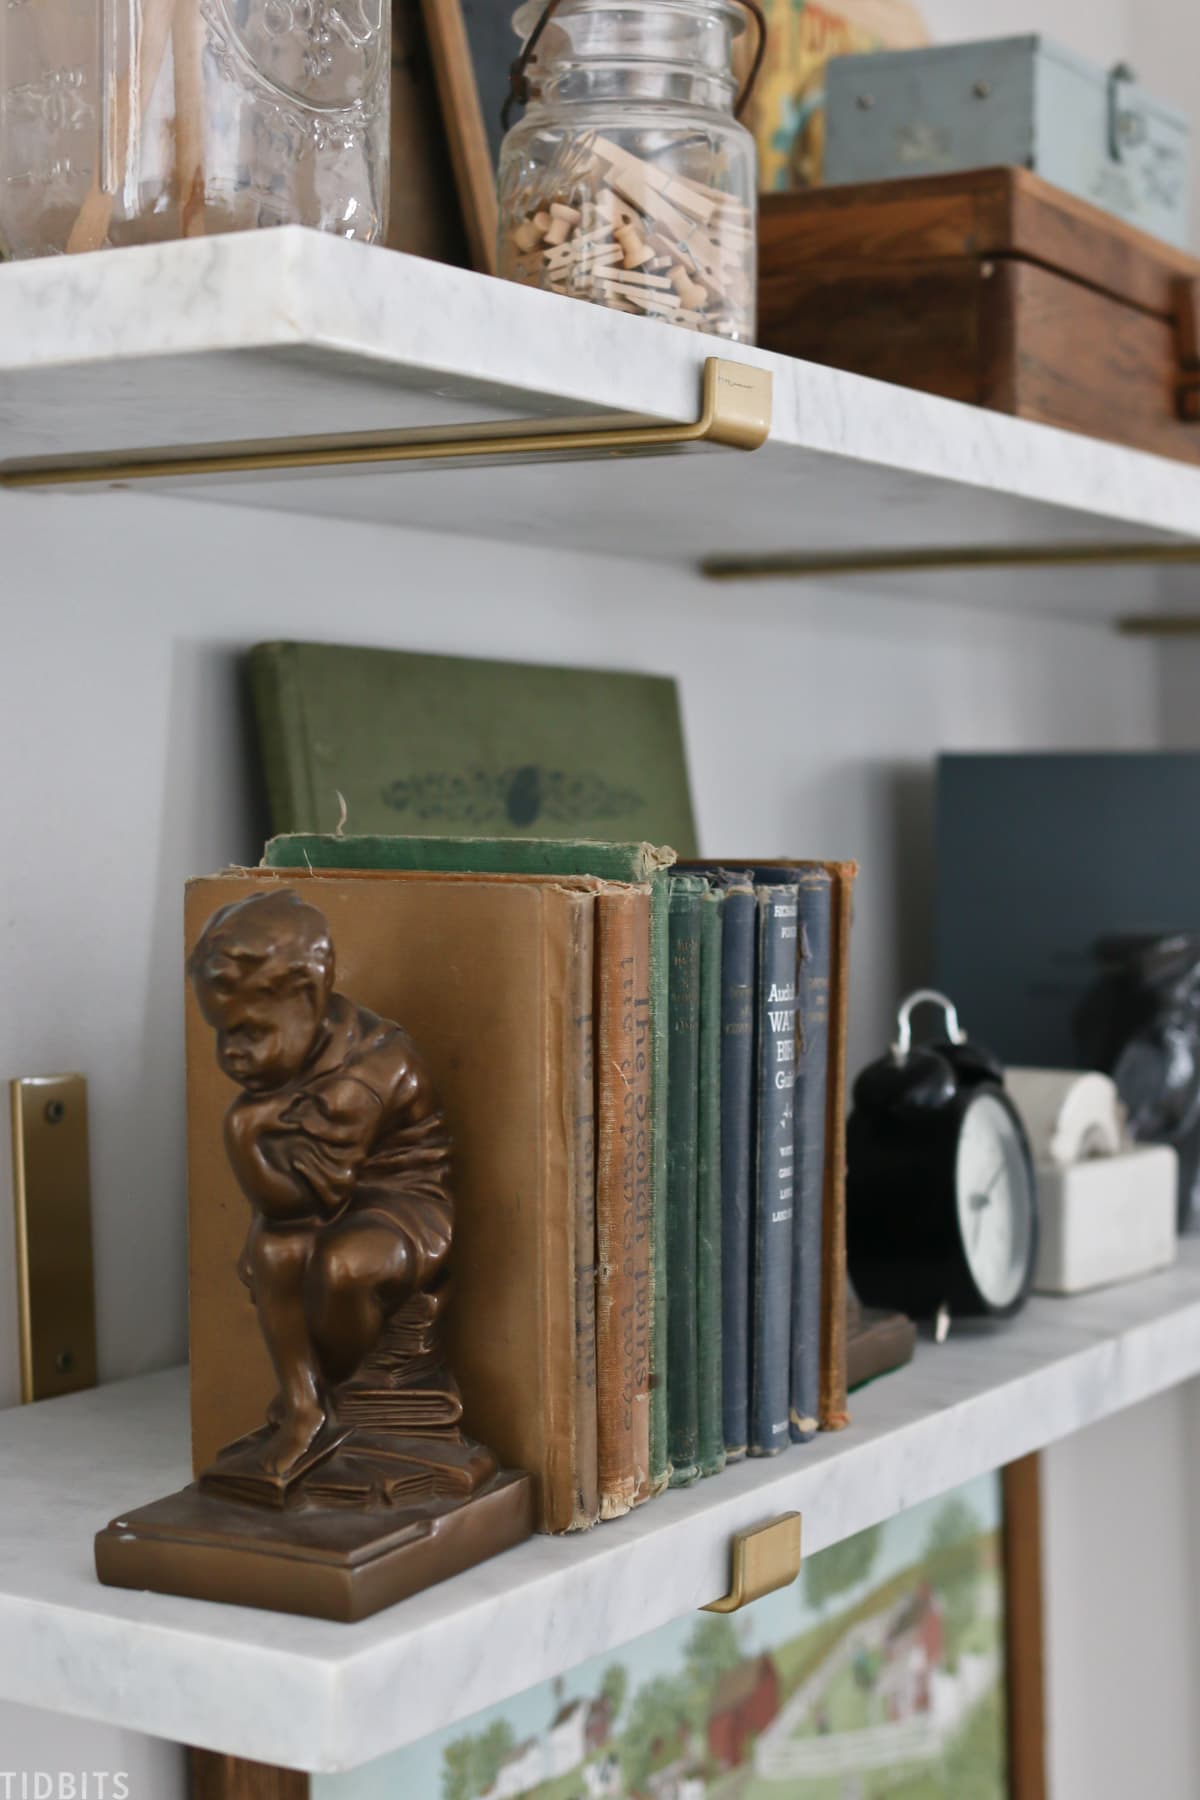 Bookends holding up a bookshelf on a floating shelf